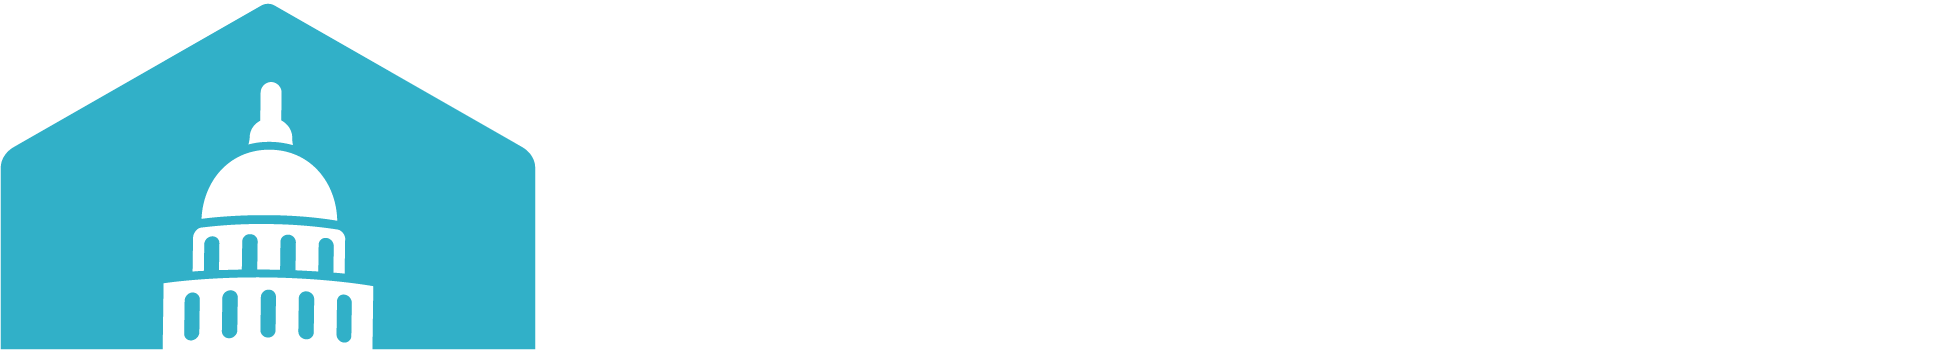 Mad City Windows